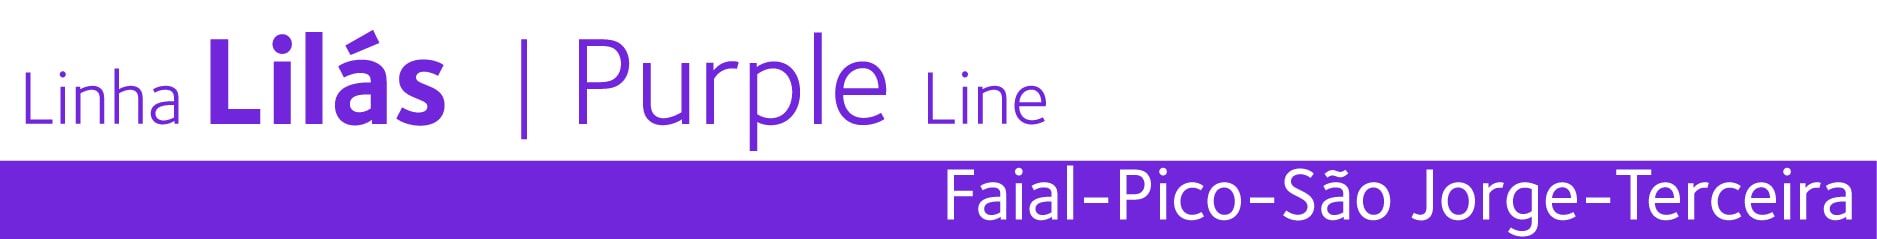 Linha Lilás - Purple Line